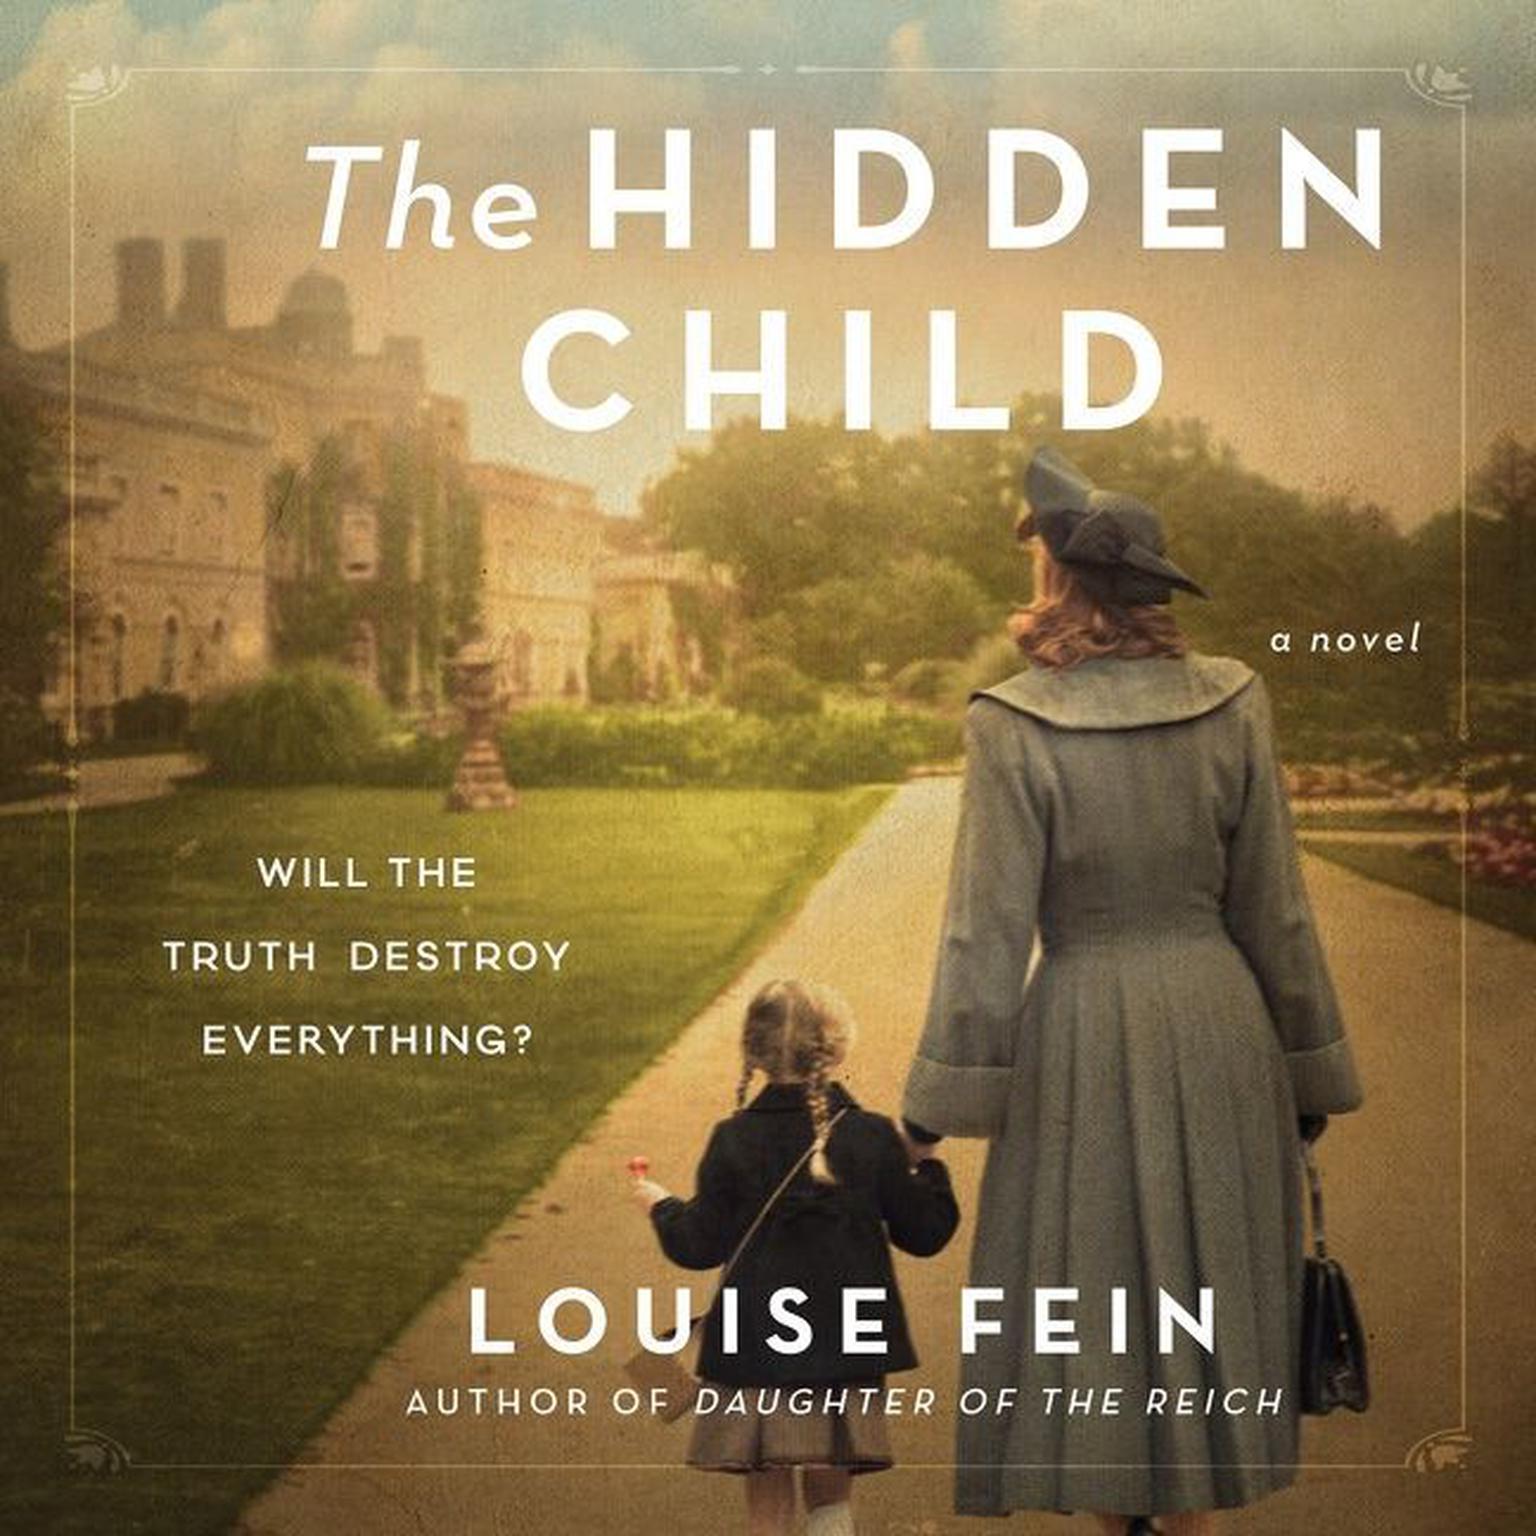 The Hidden Child Audiobook by Louise Fein — Listen Now